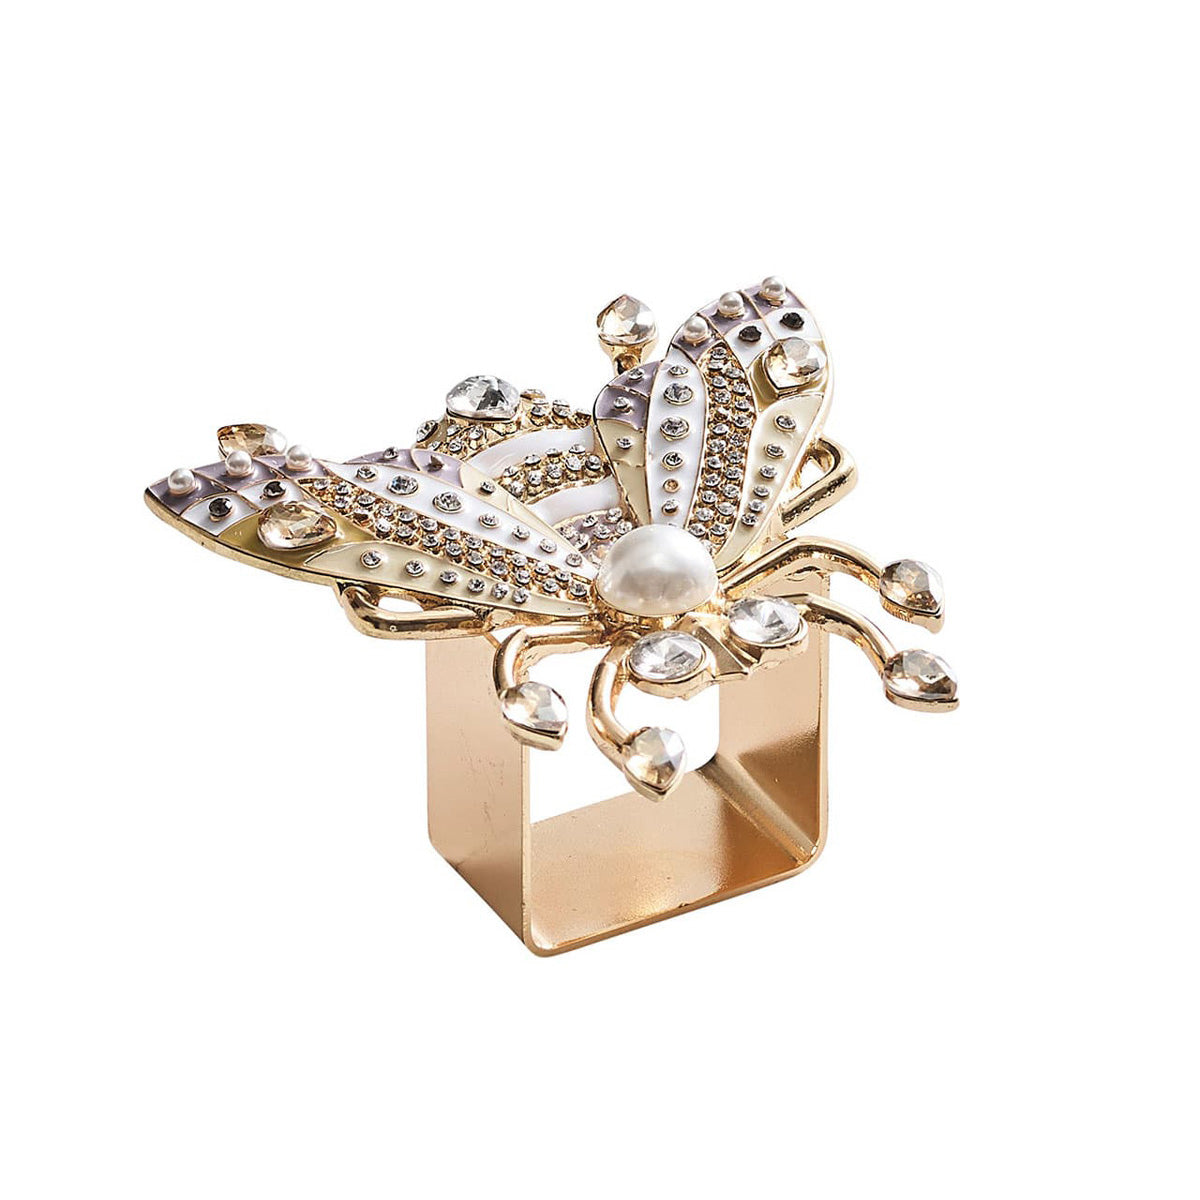 Glam Fly Napkin Ring - Set of 4 in a Gift Box by Kim Seybert